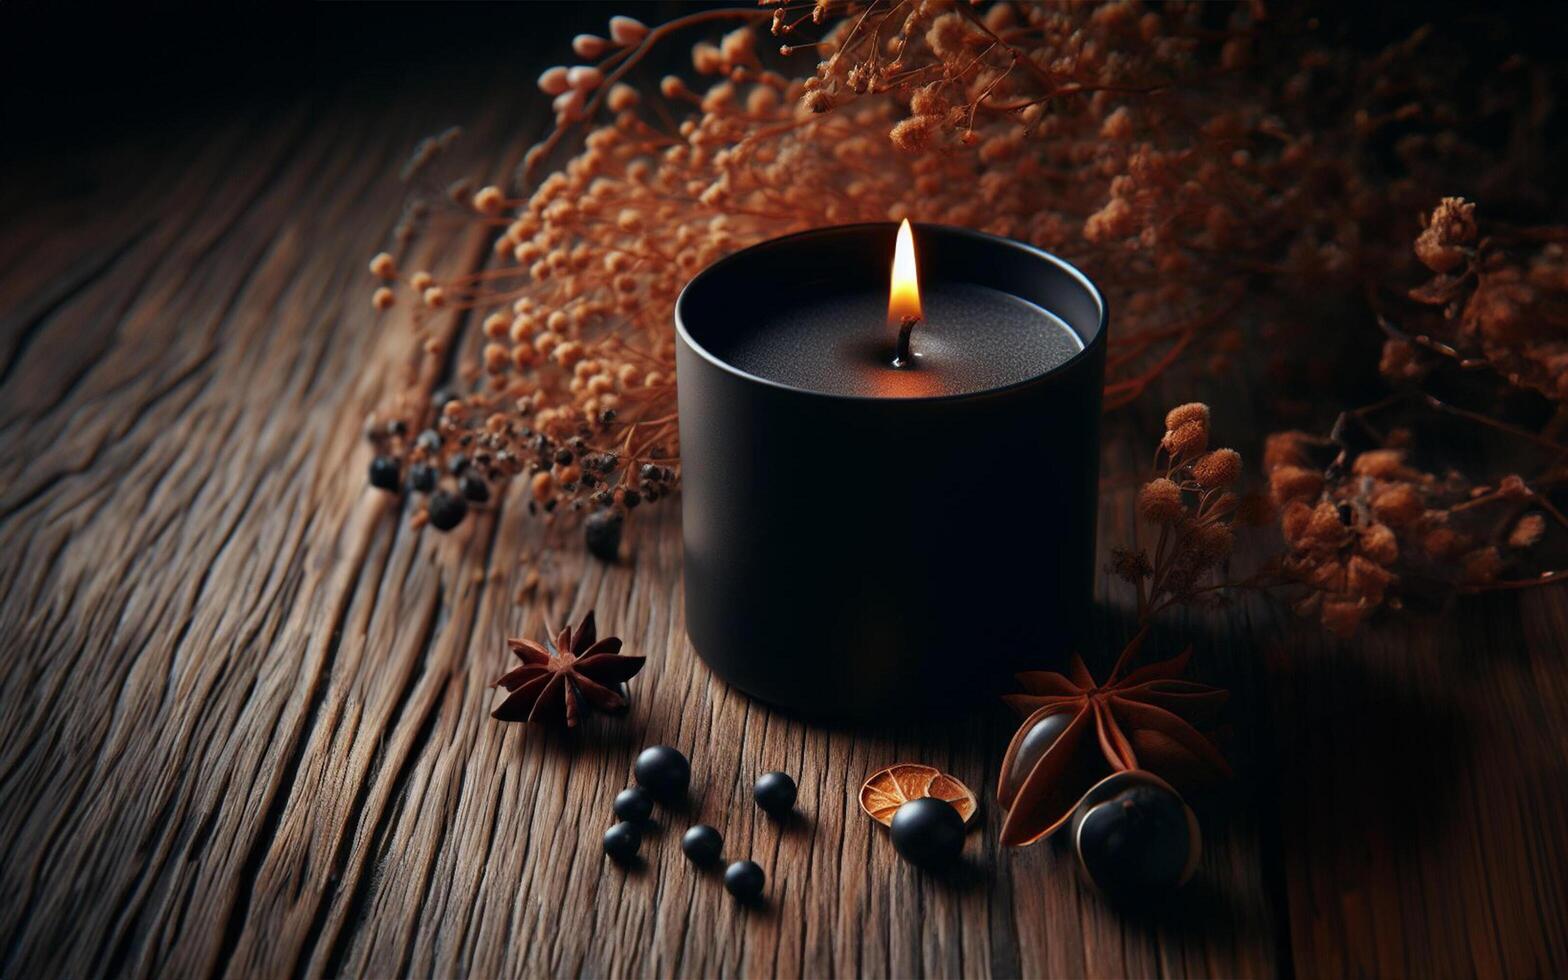 ai generado negro vela, hogar decoración vela, vainilla olor candelero en de madera piso foto